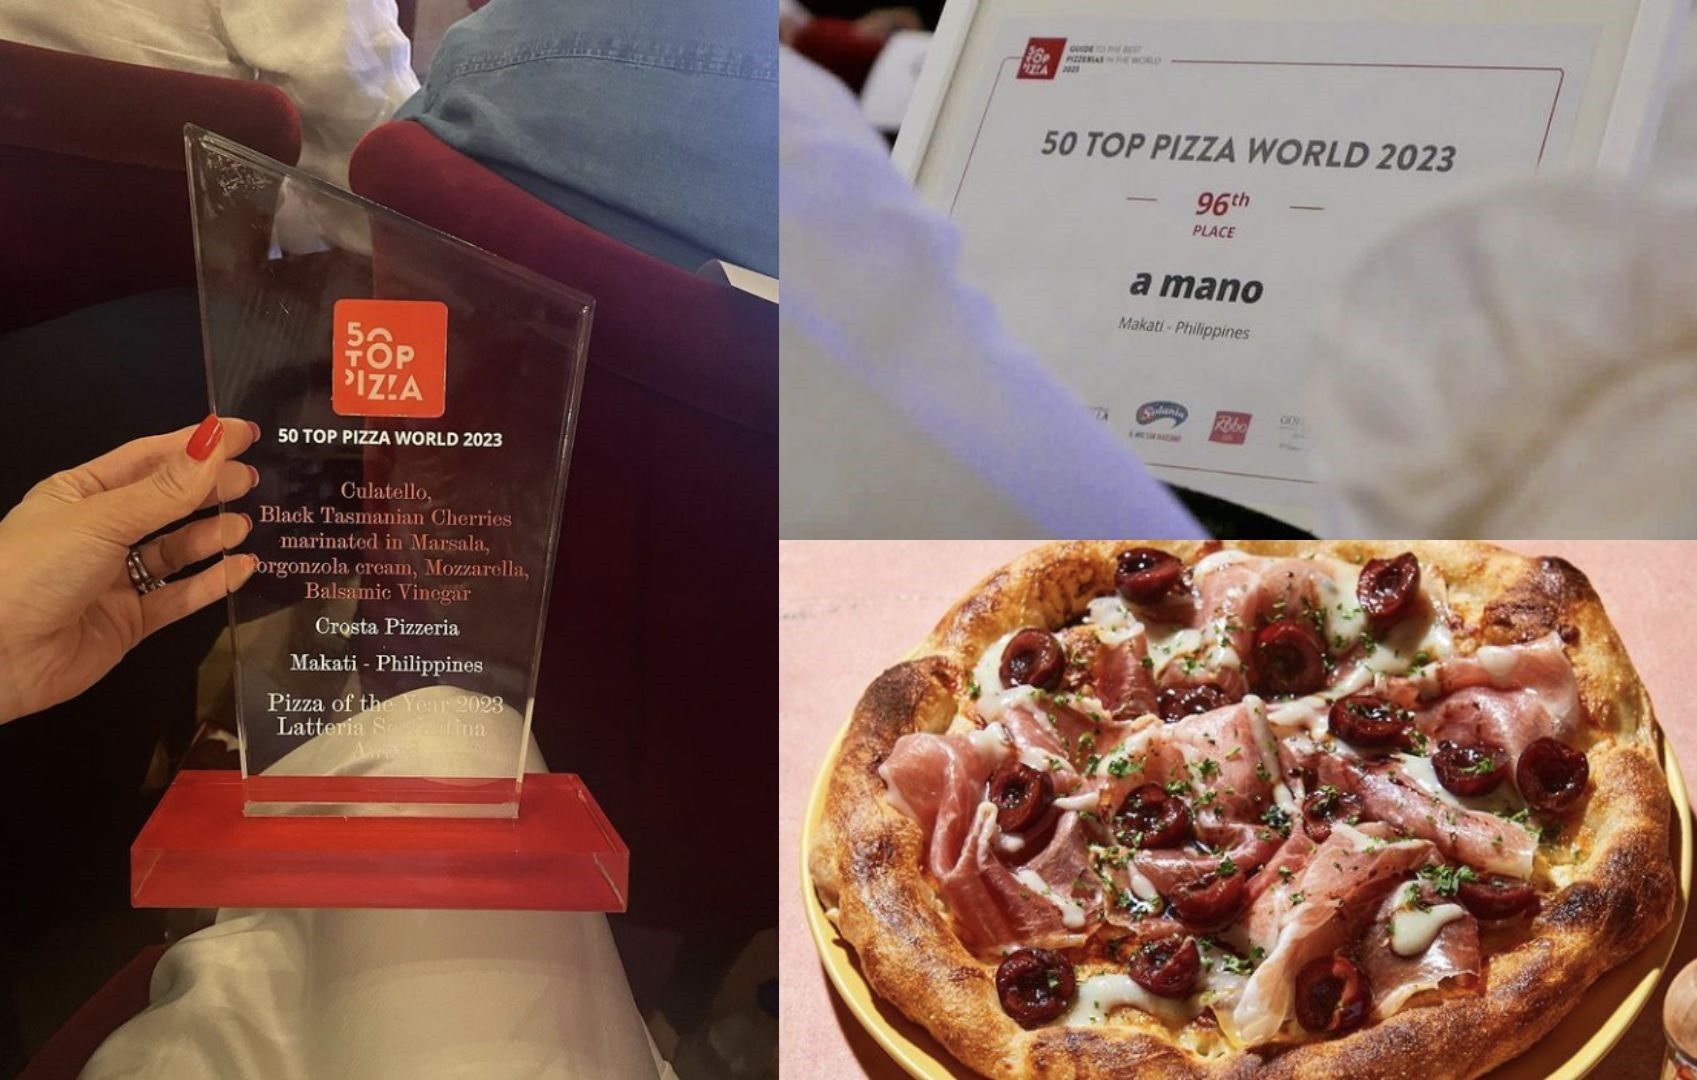 2 Houston Filipino Restaurant restaurants enter top global pizzas list, 1 wins World Pizza of the Year